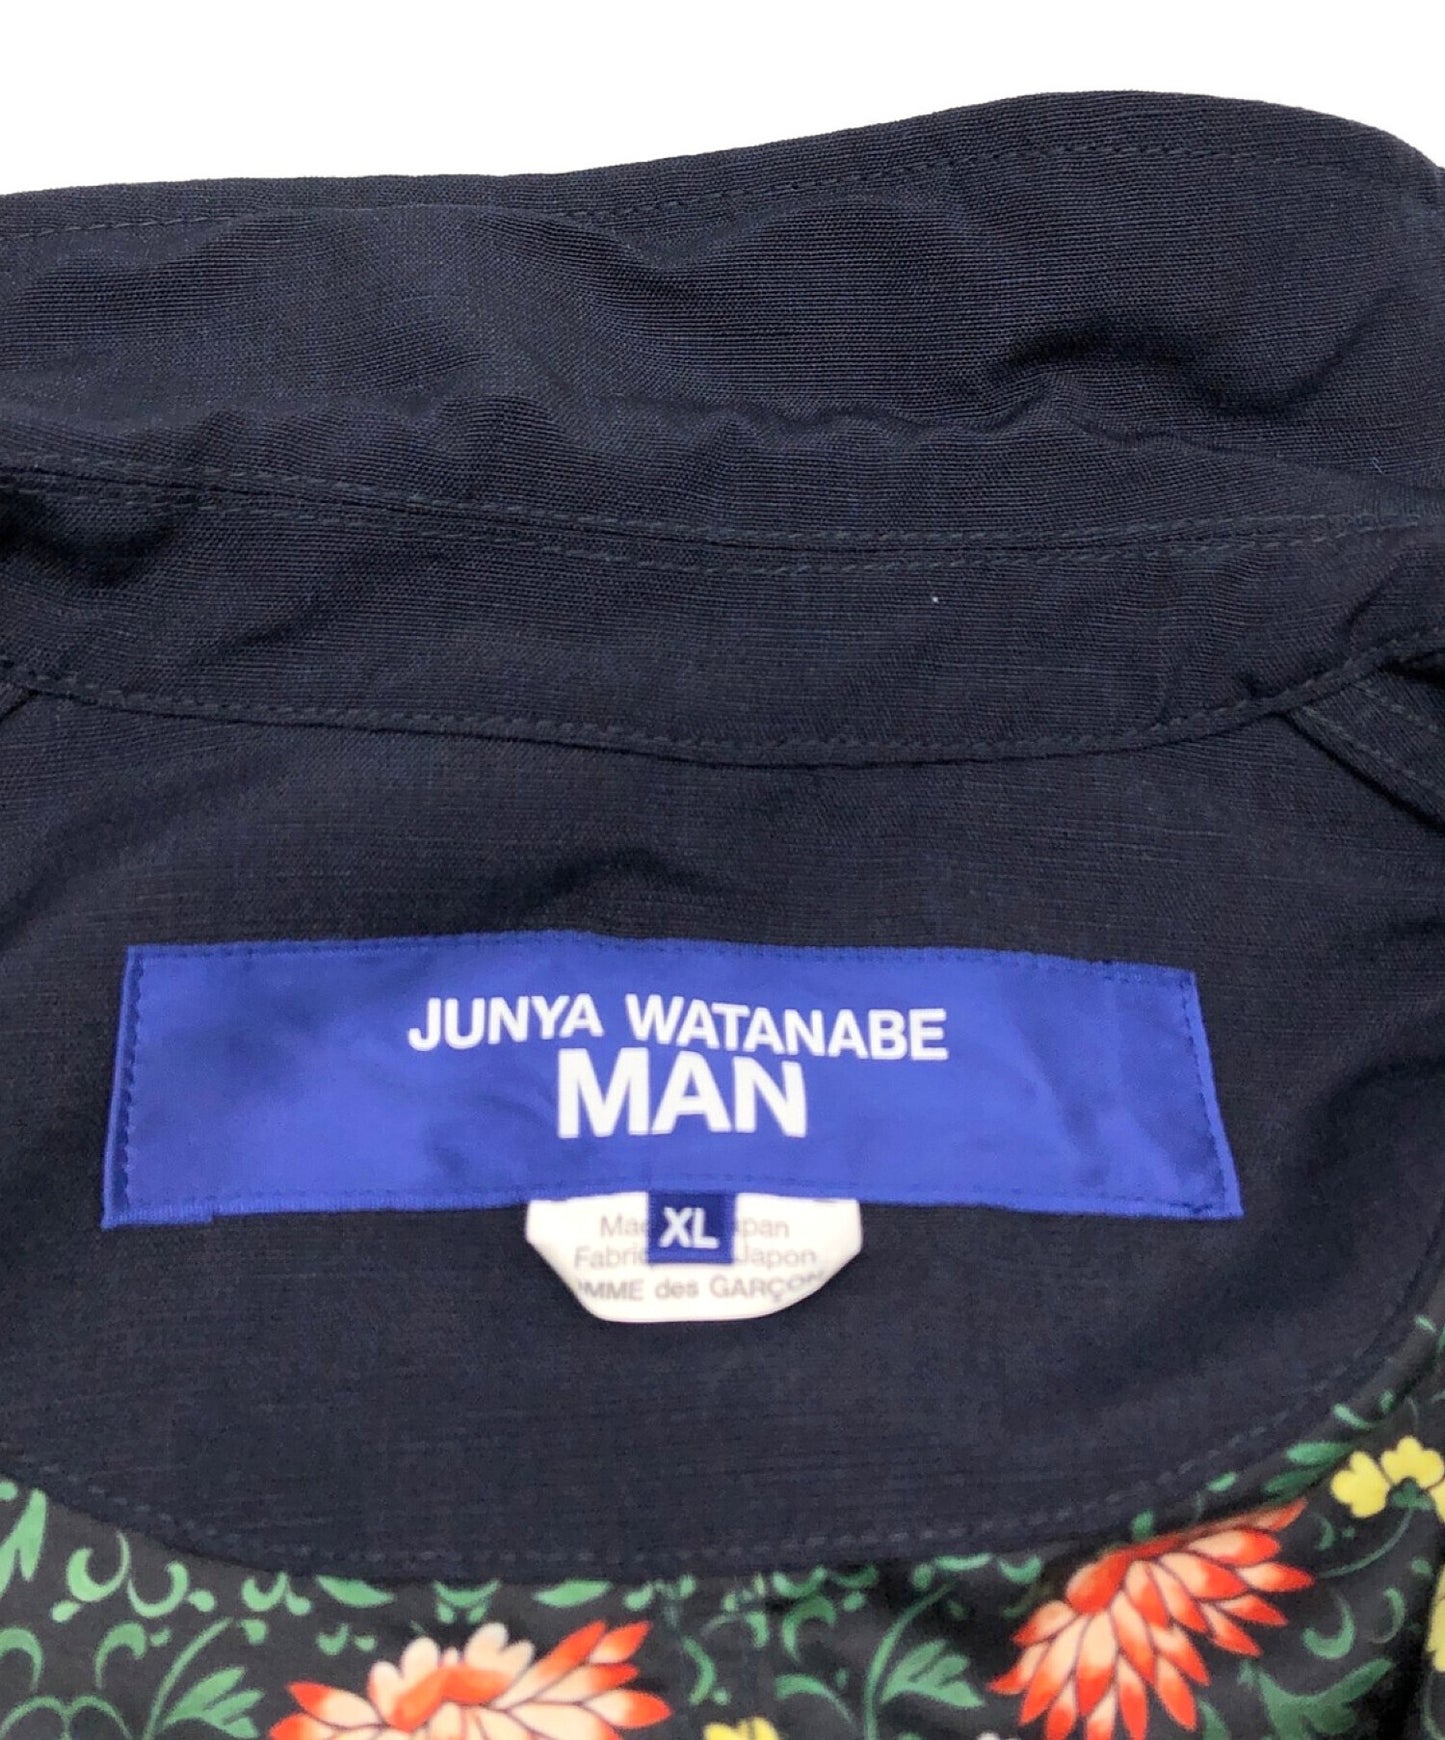 Junya Watanabe Man 가역 울 린넨 재킷 WI-J002